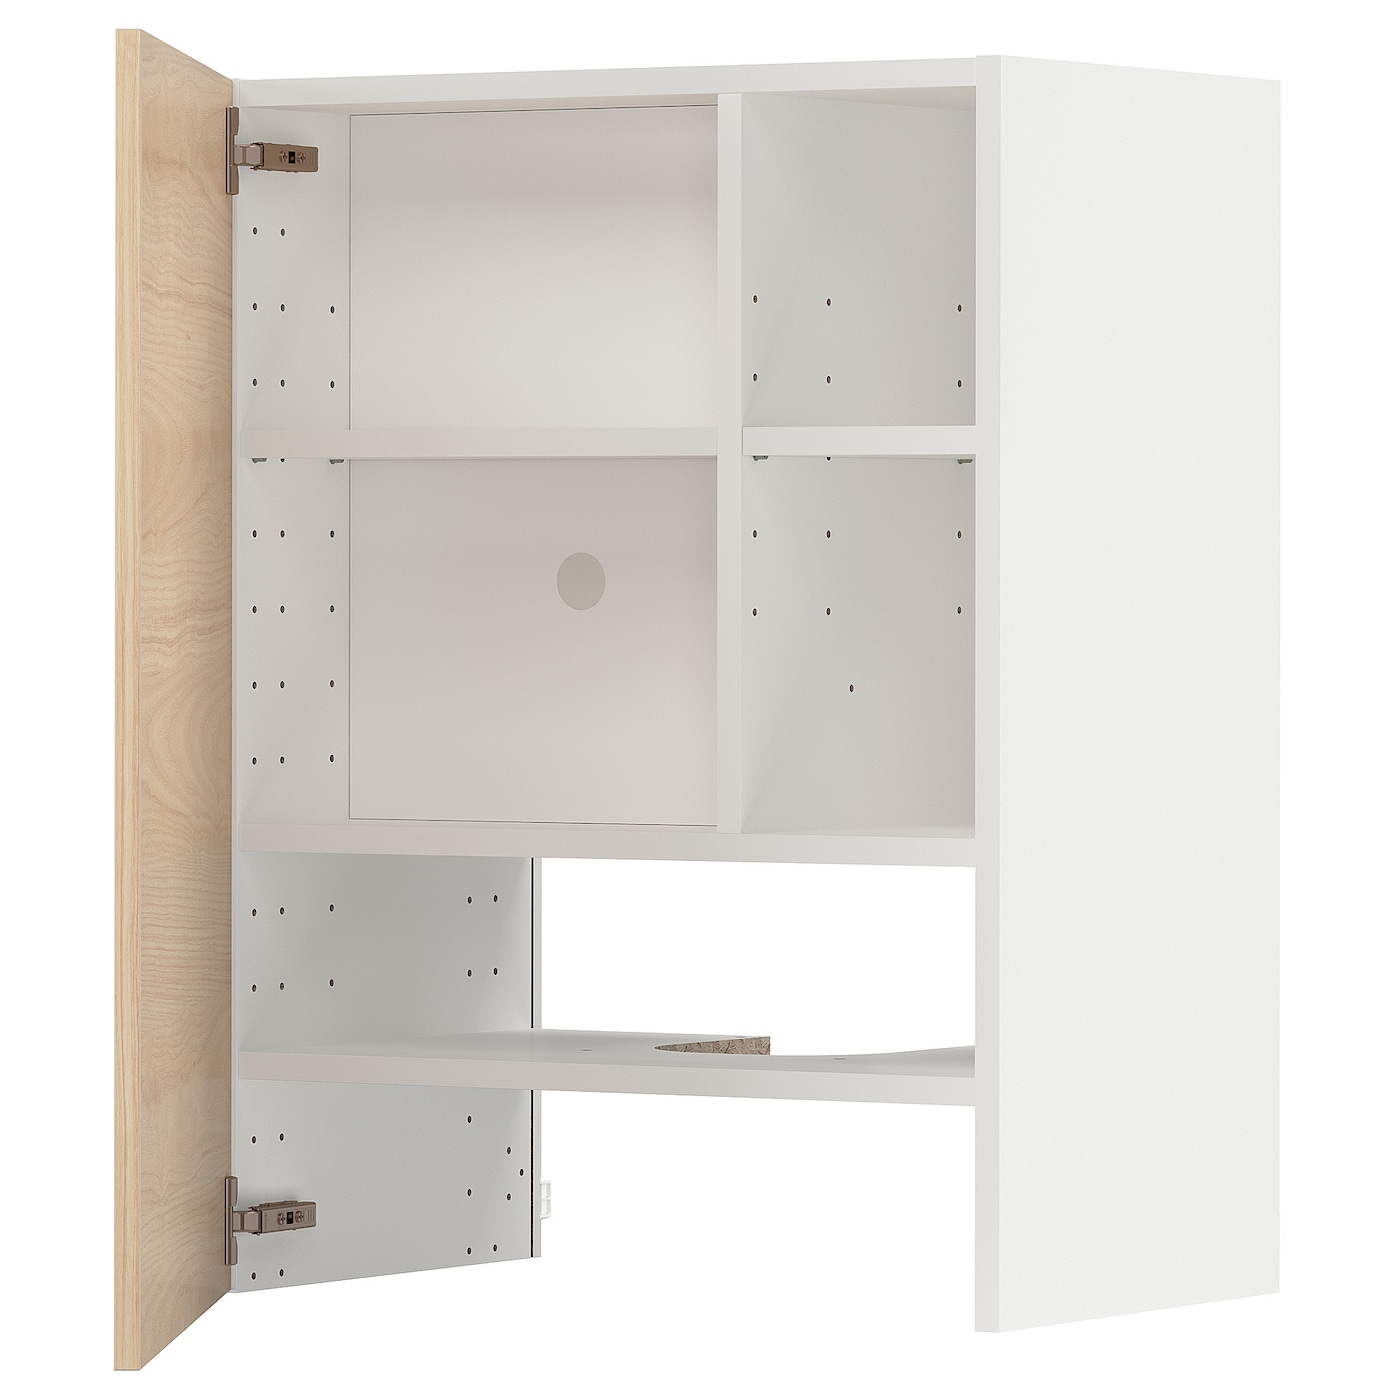 Навесной шкаф - METOD IKEA/ МЕТОД ИКЕА, 80х60 см, белый/под беленый дуб